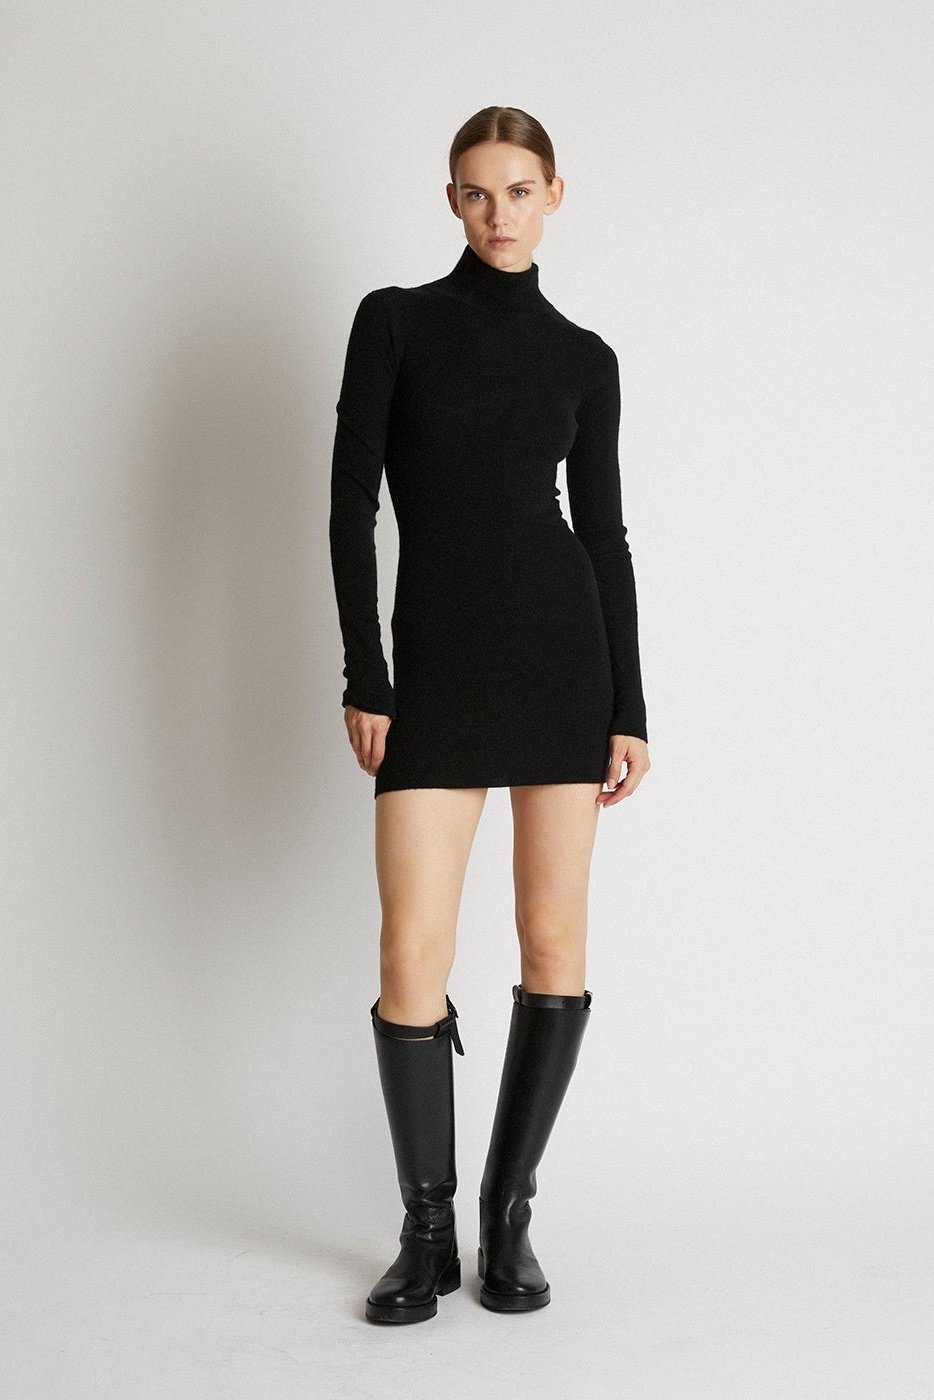 +Beryll Cashmere Turtleneck Dress | Black - +Beryll Cashmere Turtleneck Dress | Black - +Beryll Worn By Good People